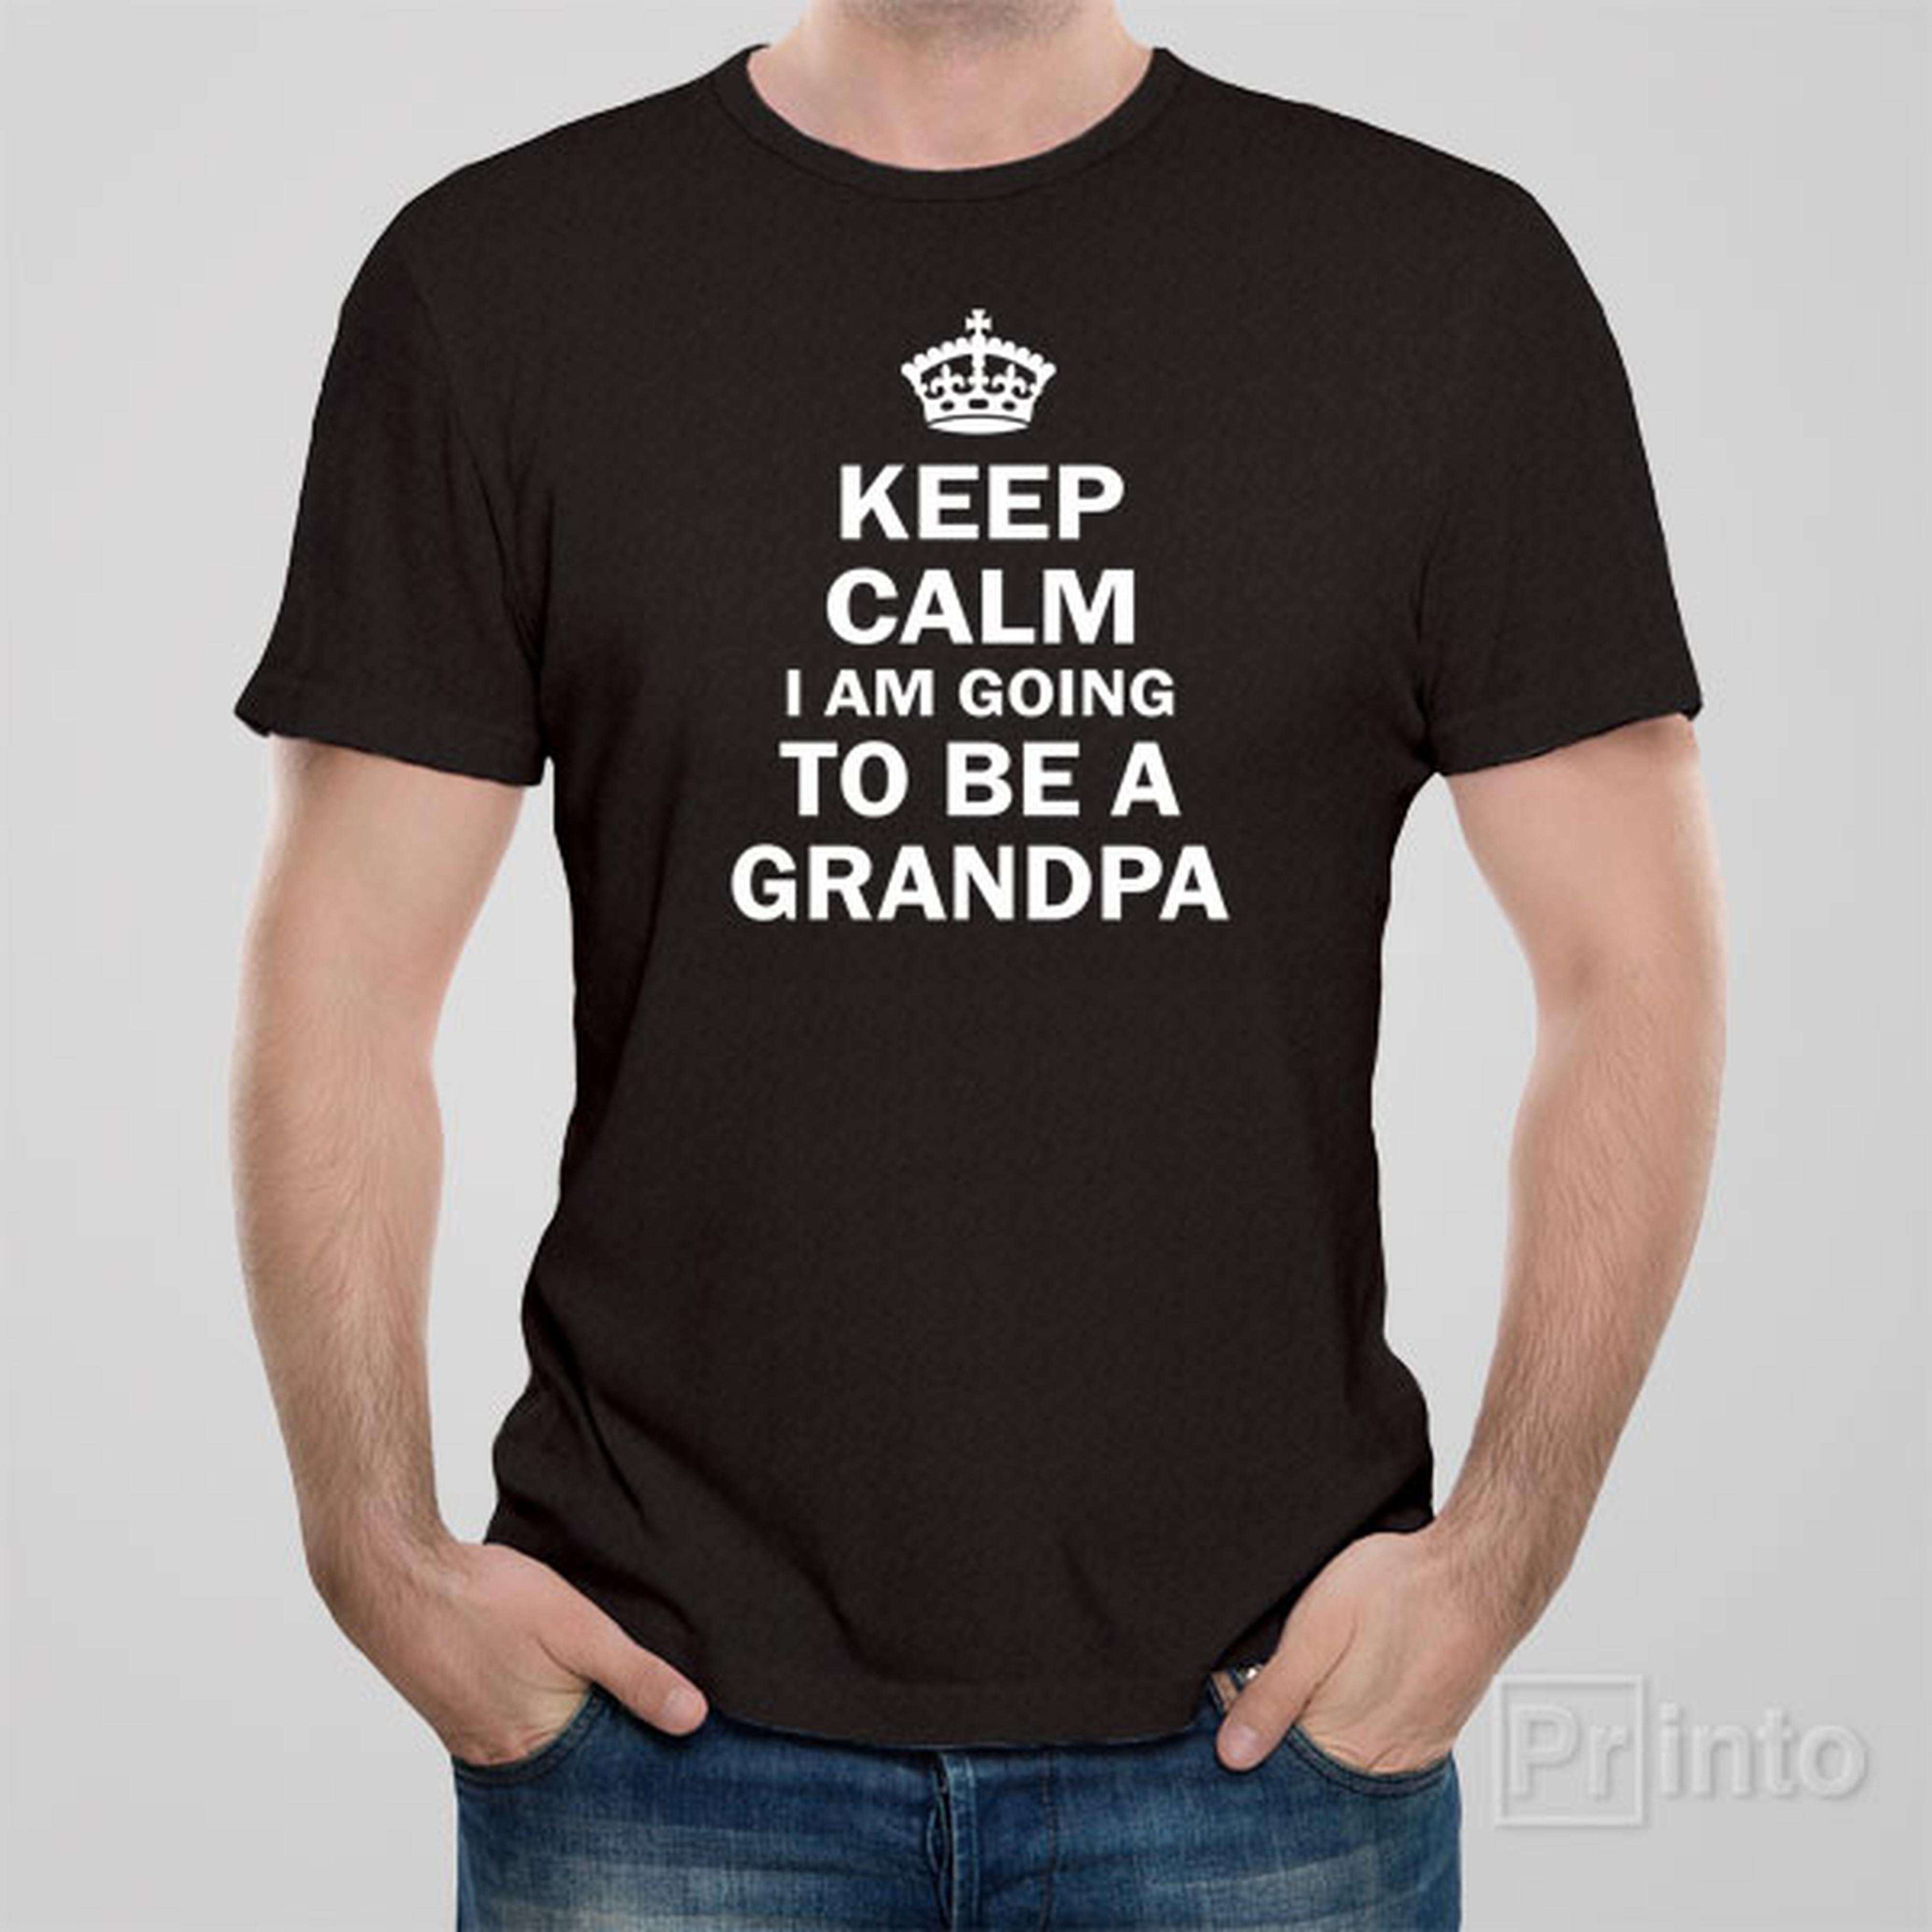 keep-calm-i-am-going-to-be-a-grandpa-t-shirt